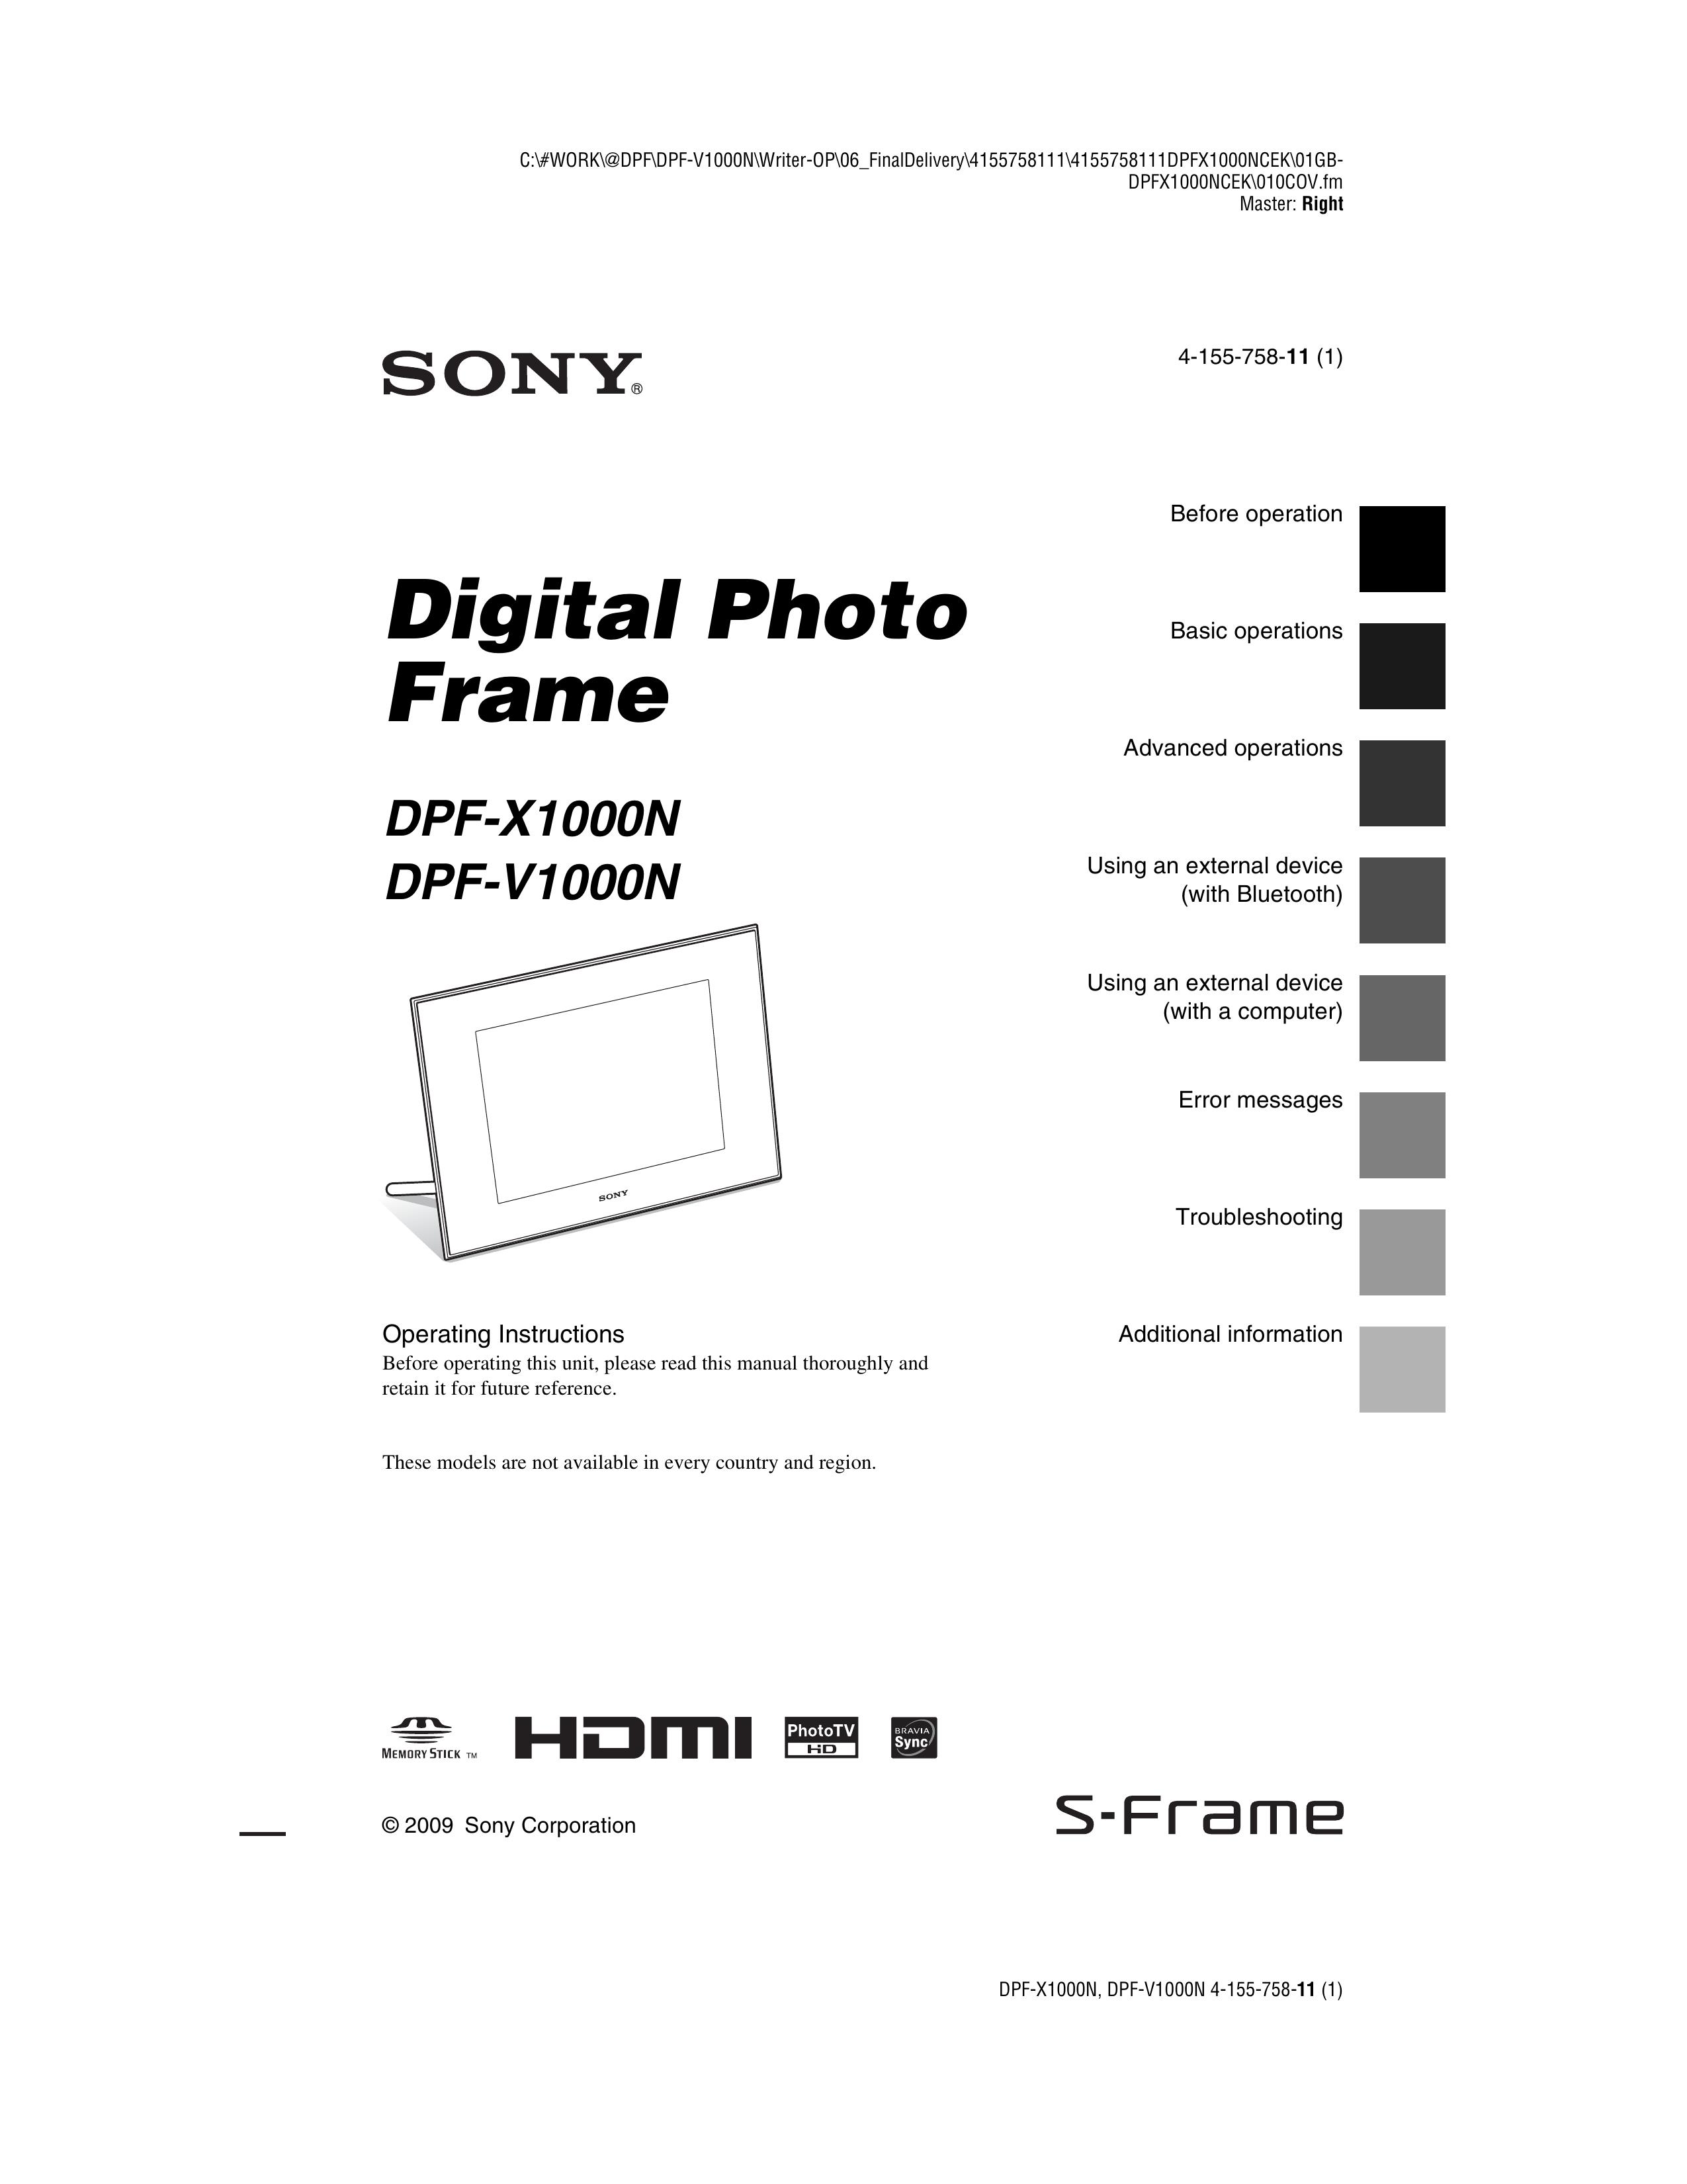 Sony DPF-V1000N Digital Photo Frame User Manual